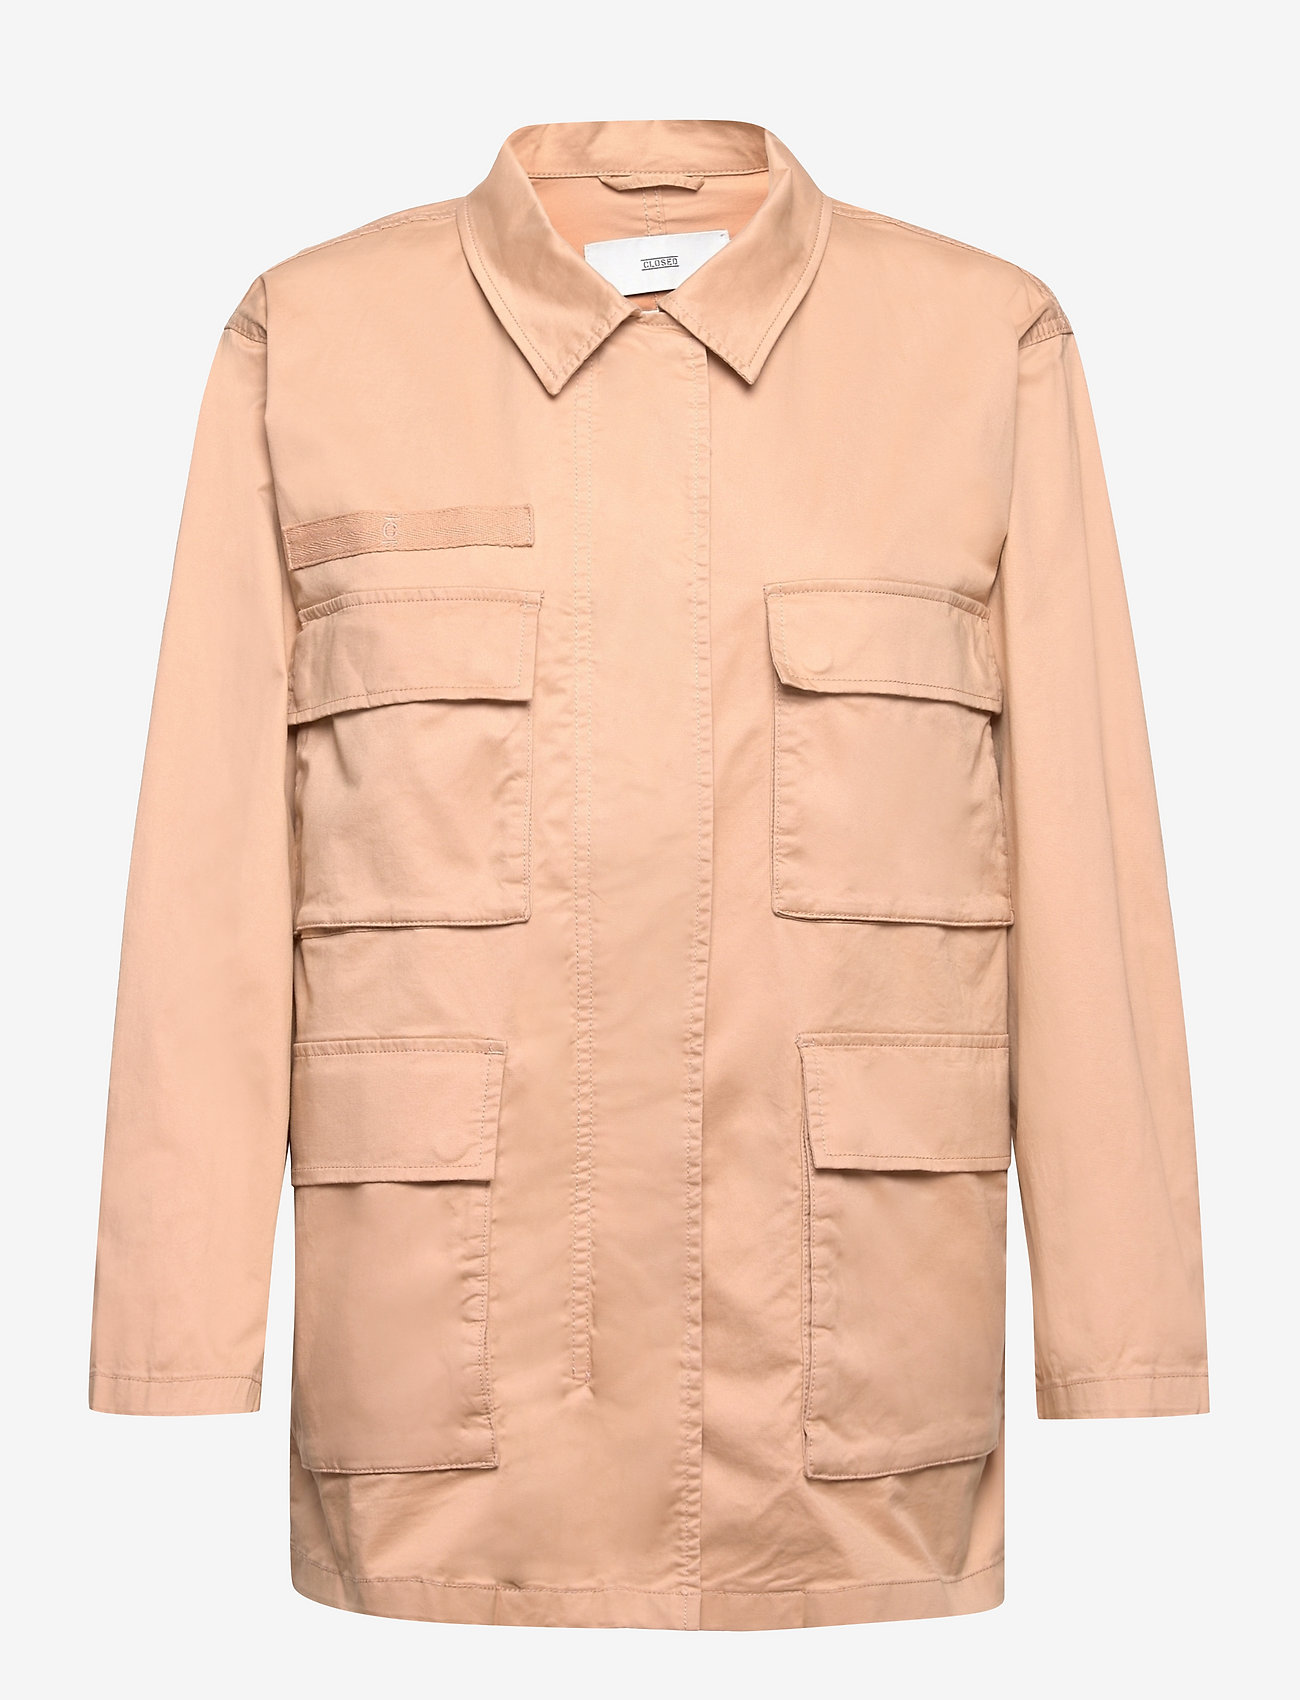 Closed - womens jacket - utility jackets - sandstone - 0